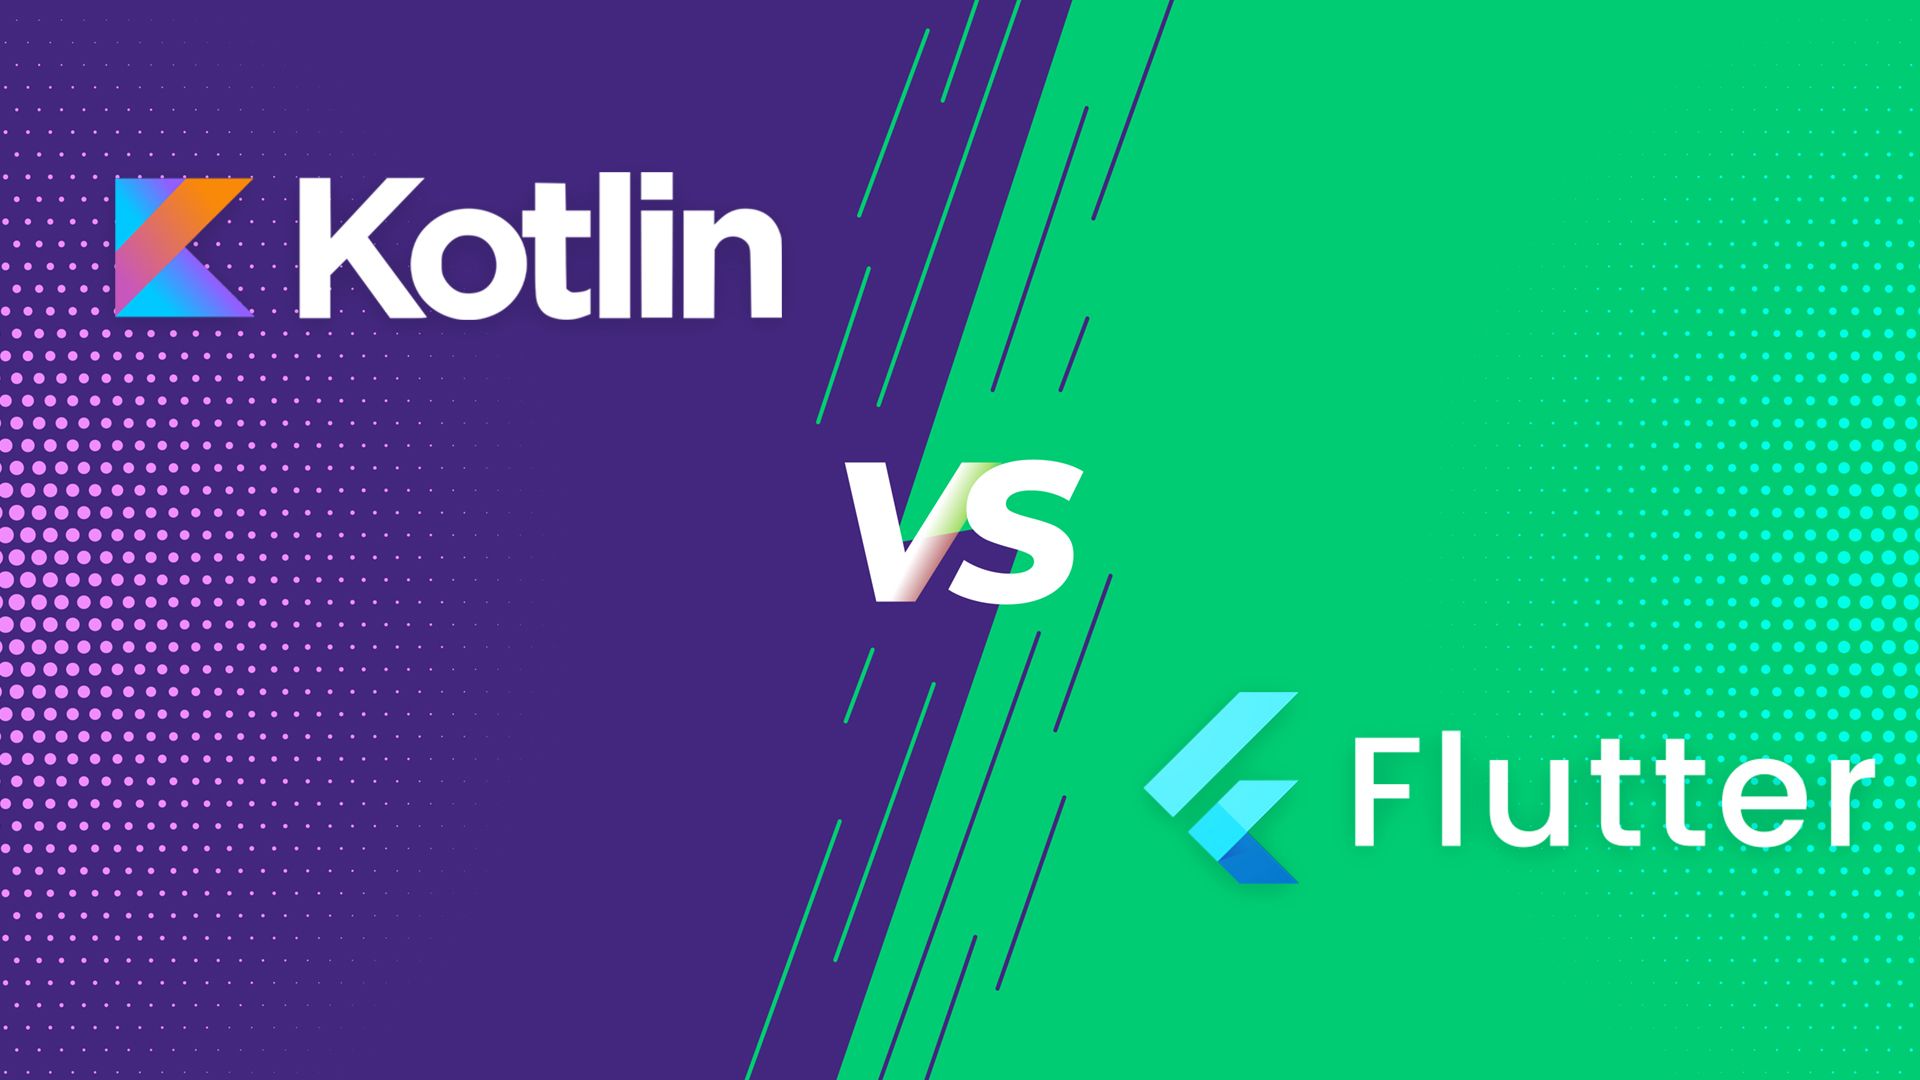 /kotlin-vs-flutter-which-one-races-ahead-vk1d3tu4 feature image